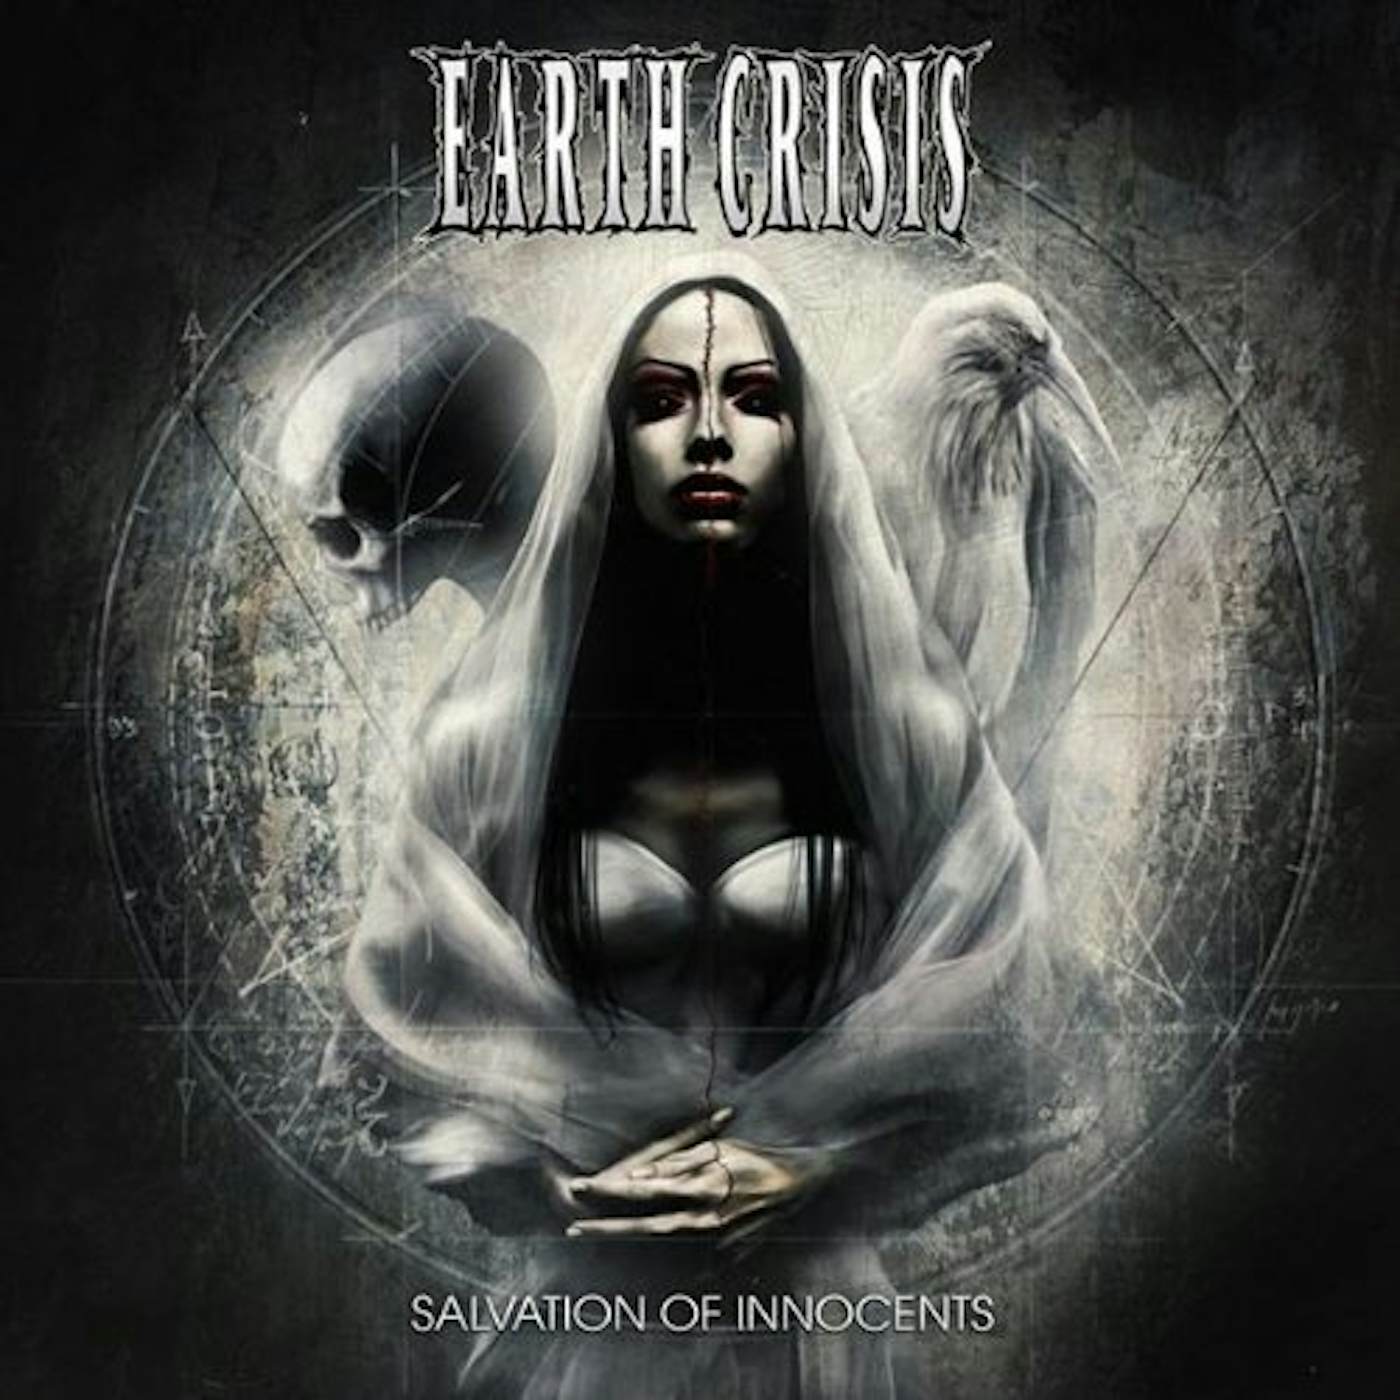 Earth Crisis Salvation Of Innocents Vinyl Record